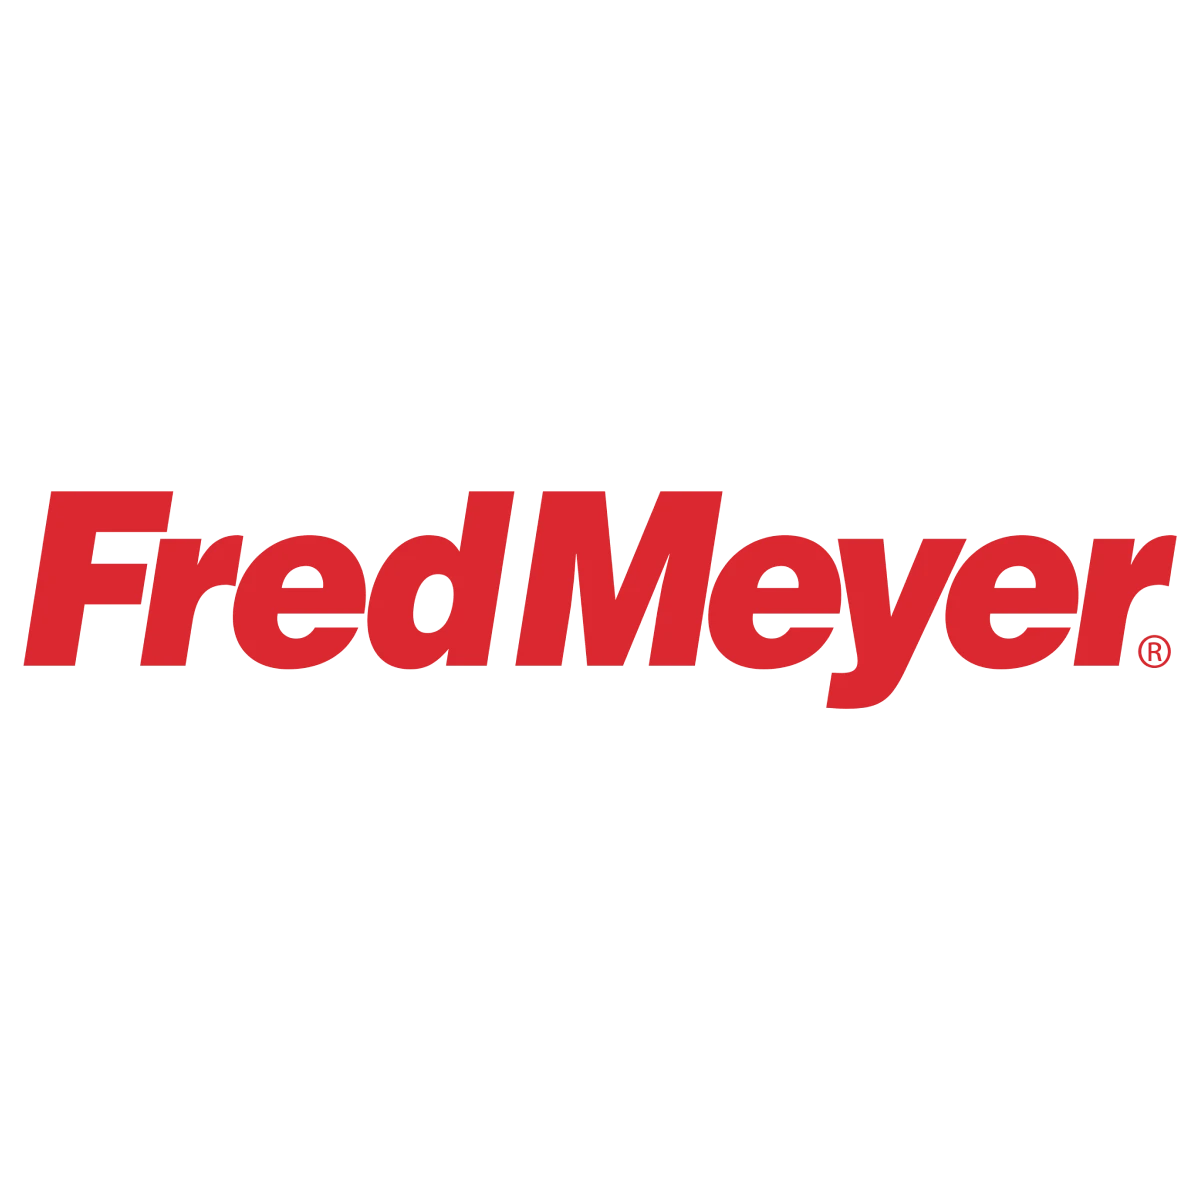 Fred Meyer grocery store horizontal logo